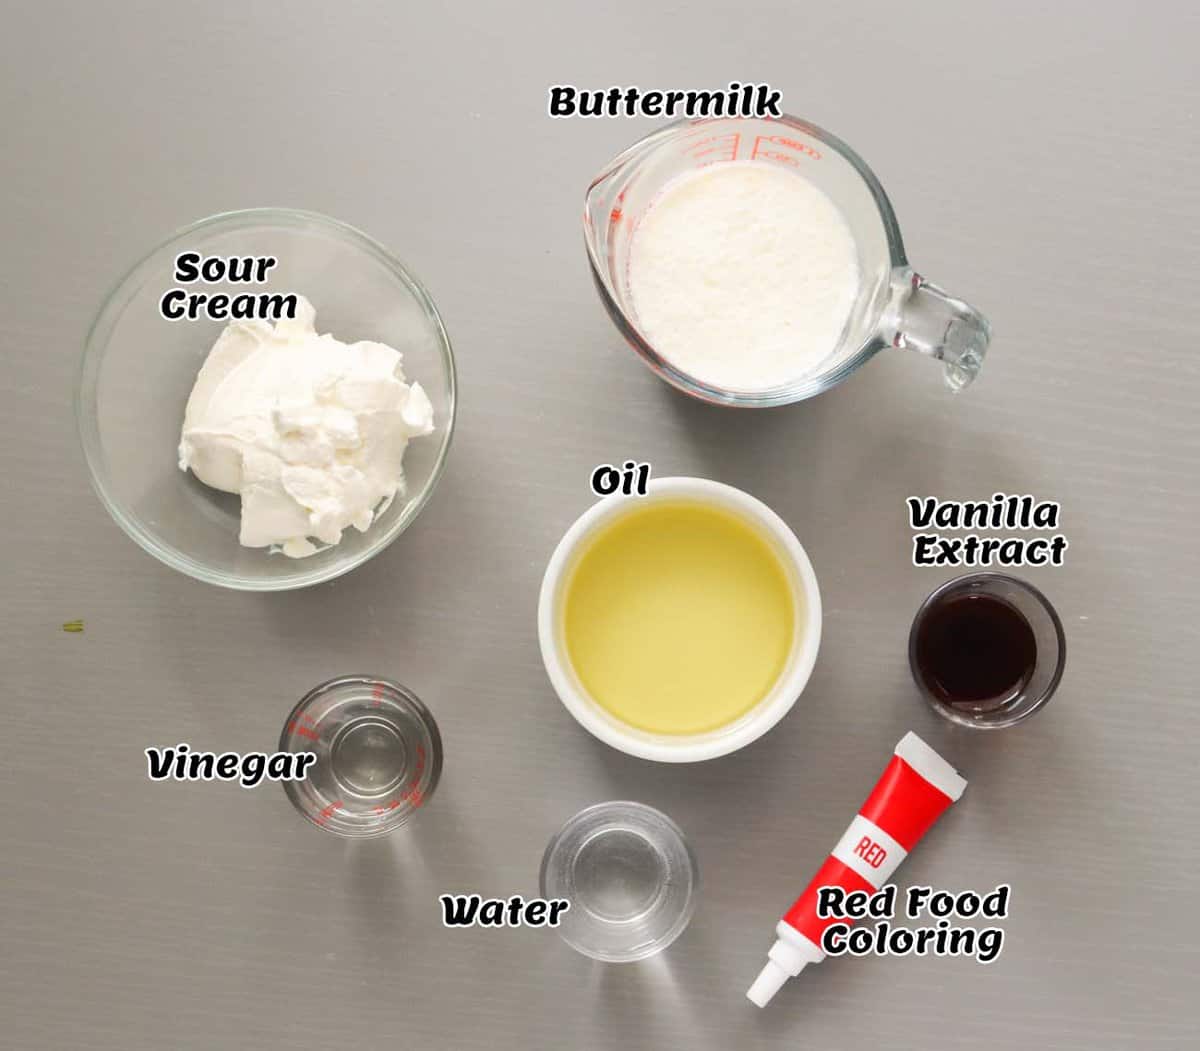 Red Velvet Cheesecake Recipe Ingredients